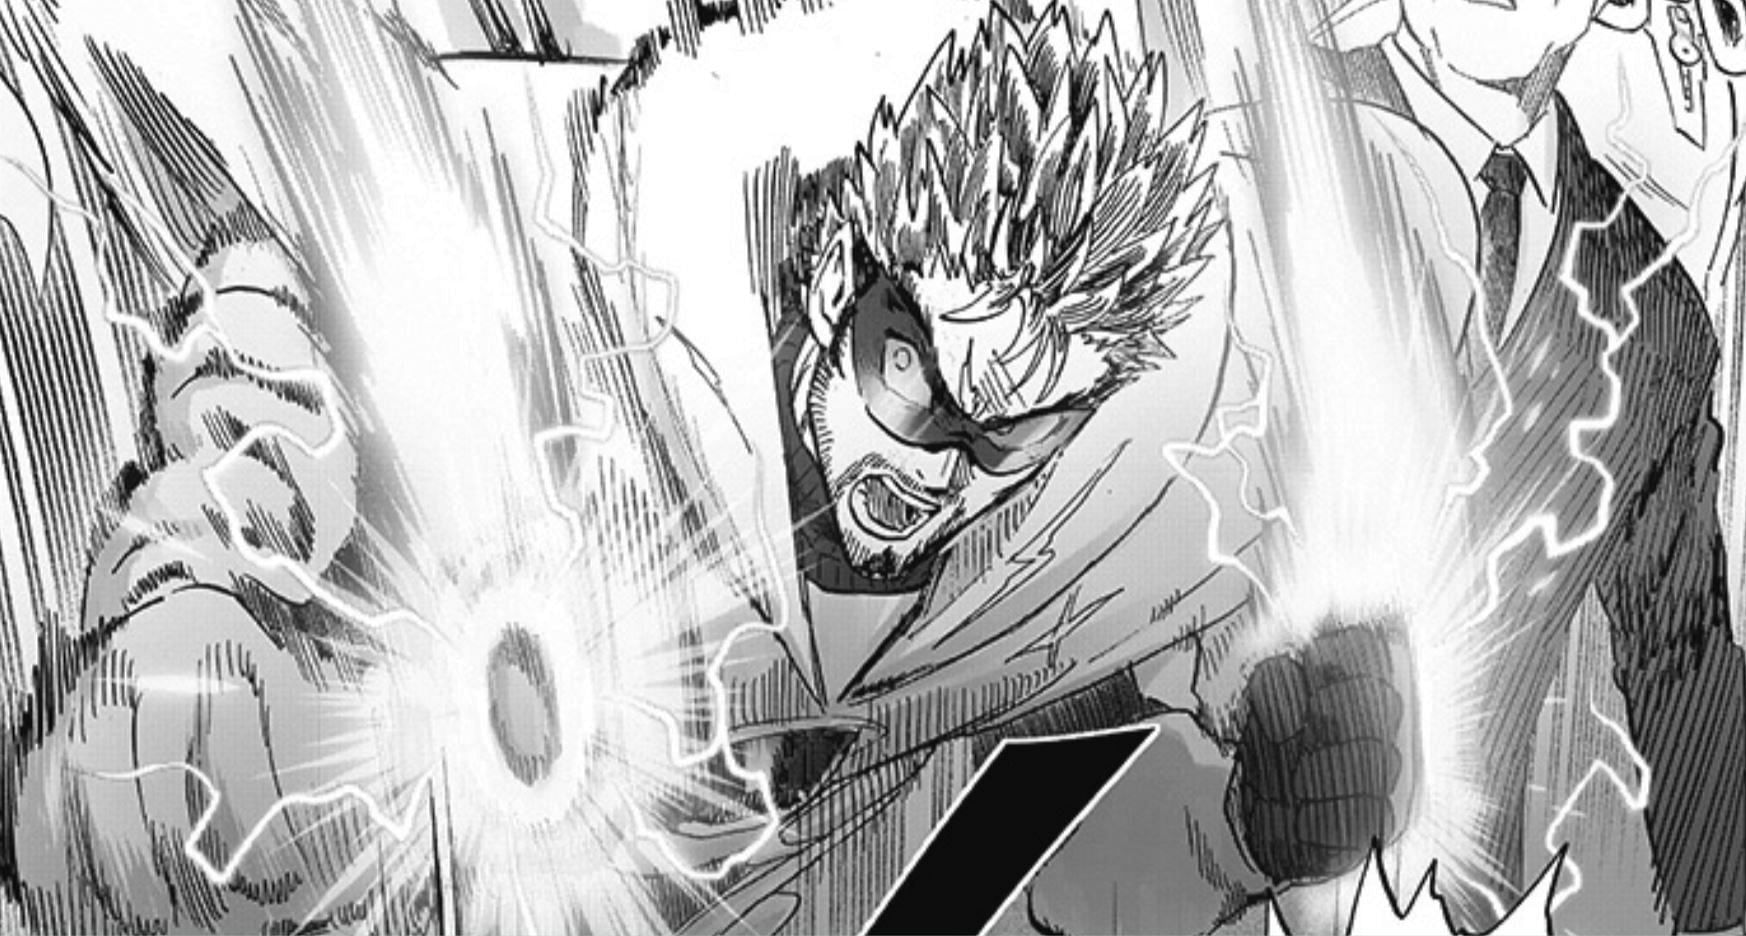 Blast as seen in Redrawn One Punch Man Chapter 196 (Image via Shueisha)